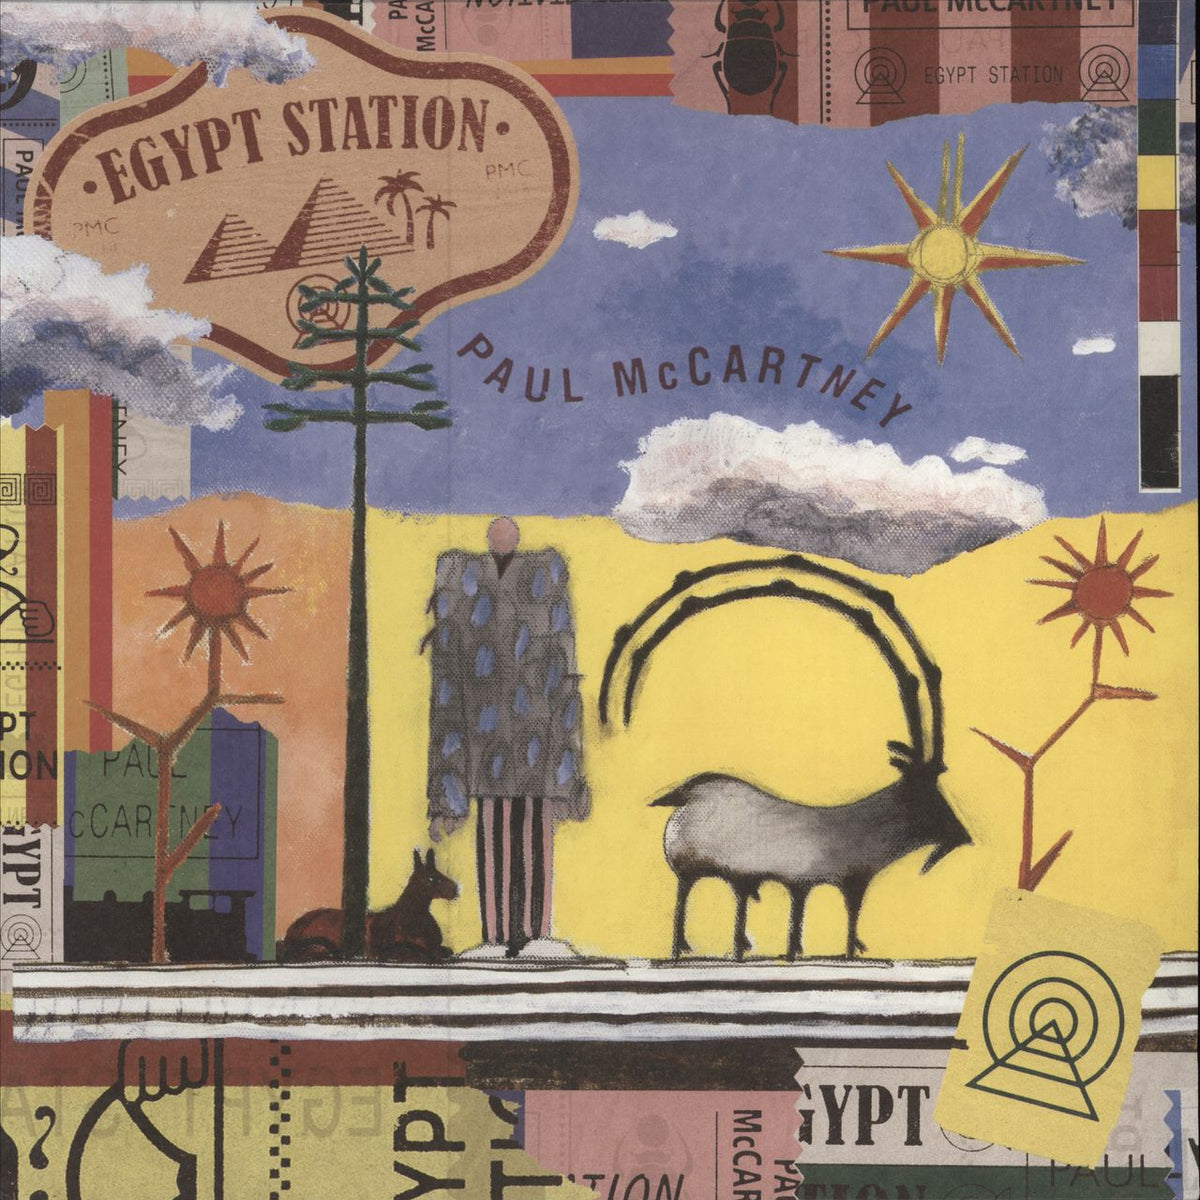 Paul McCartney and Wings Egypt Station - Spotify Green Vinyl US 2-LP v —  RareVinyl.com